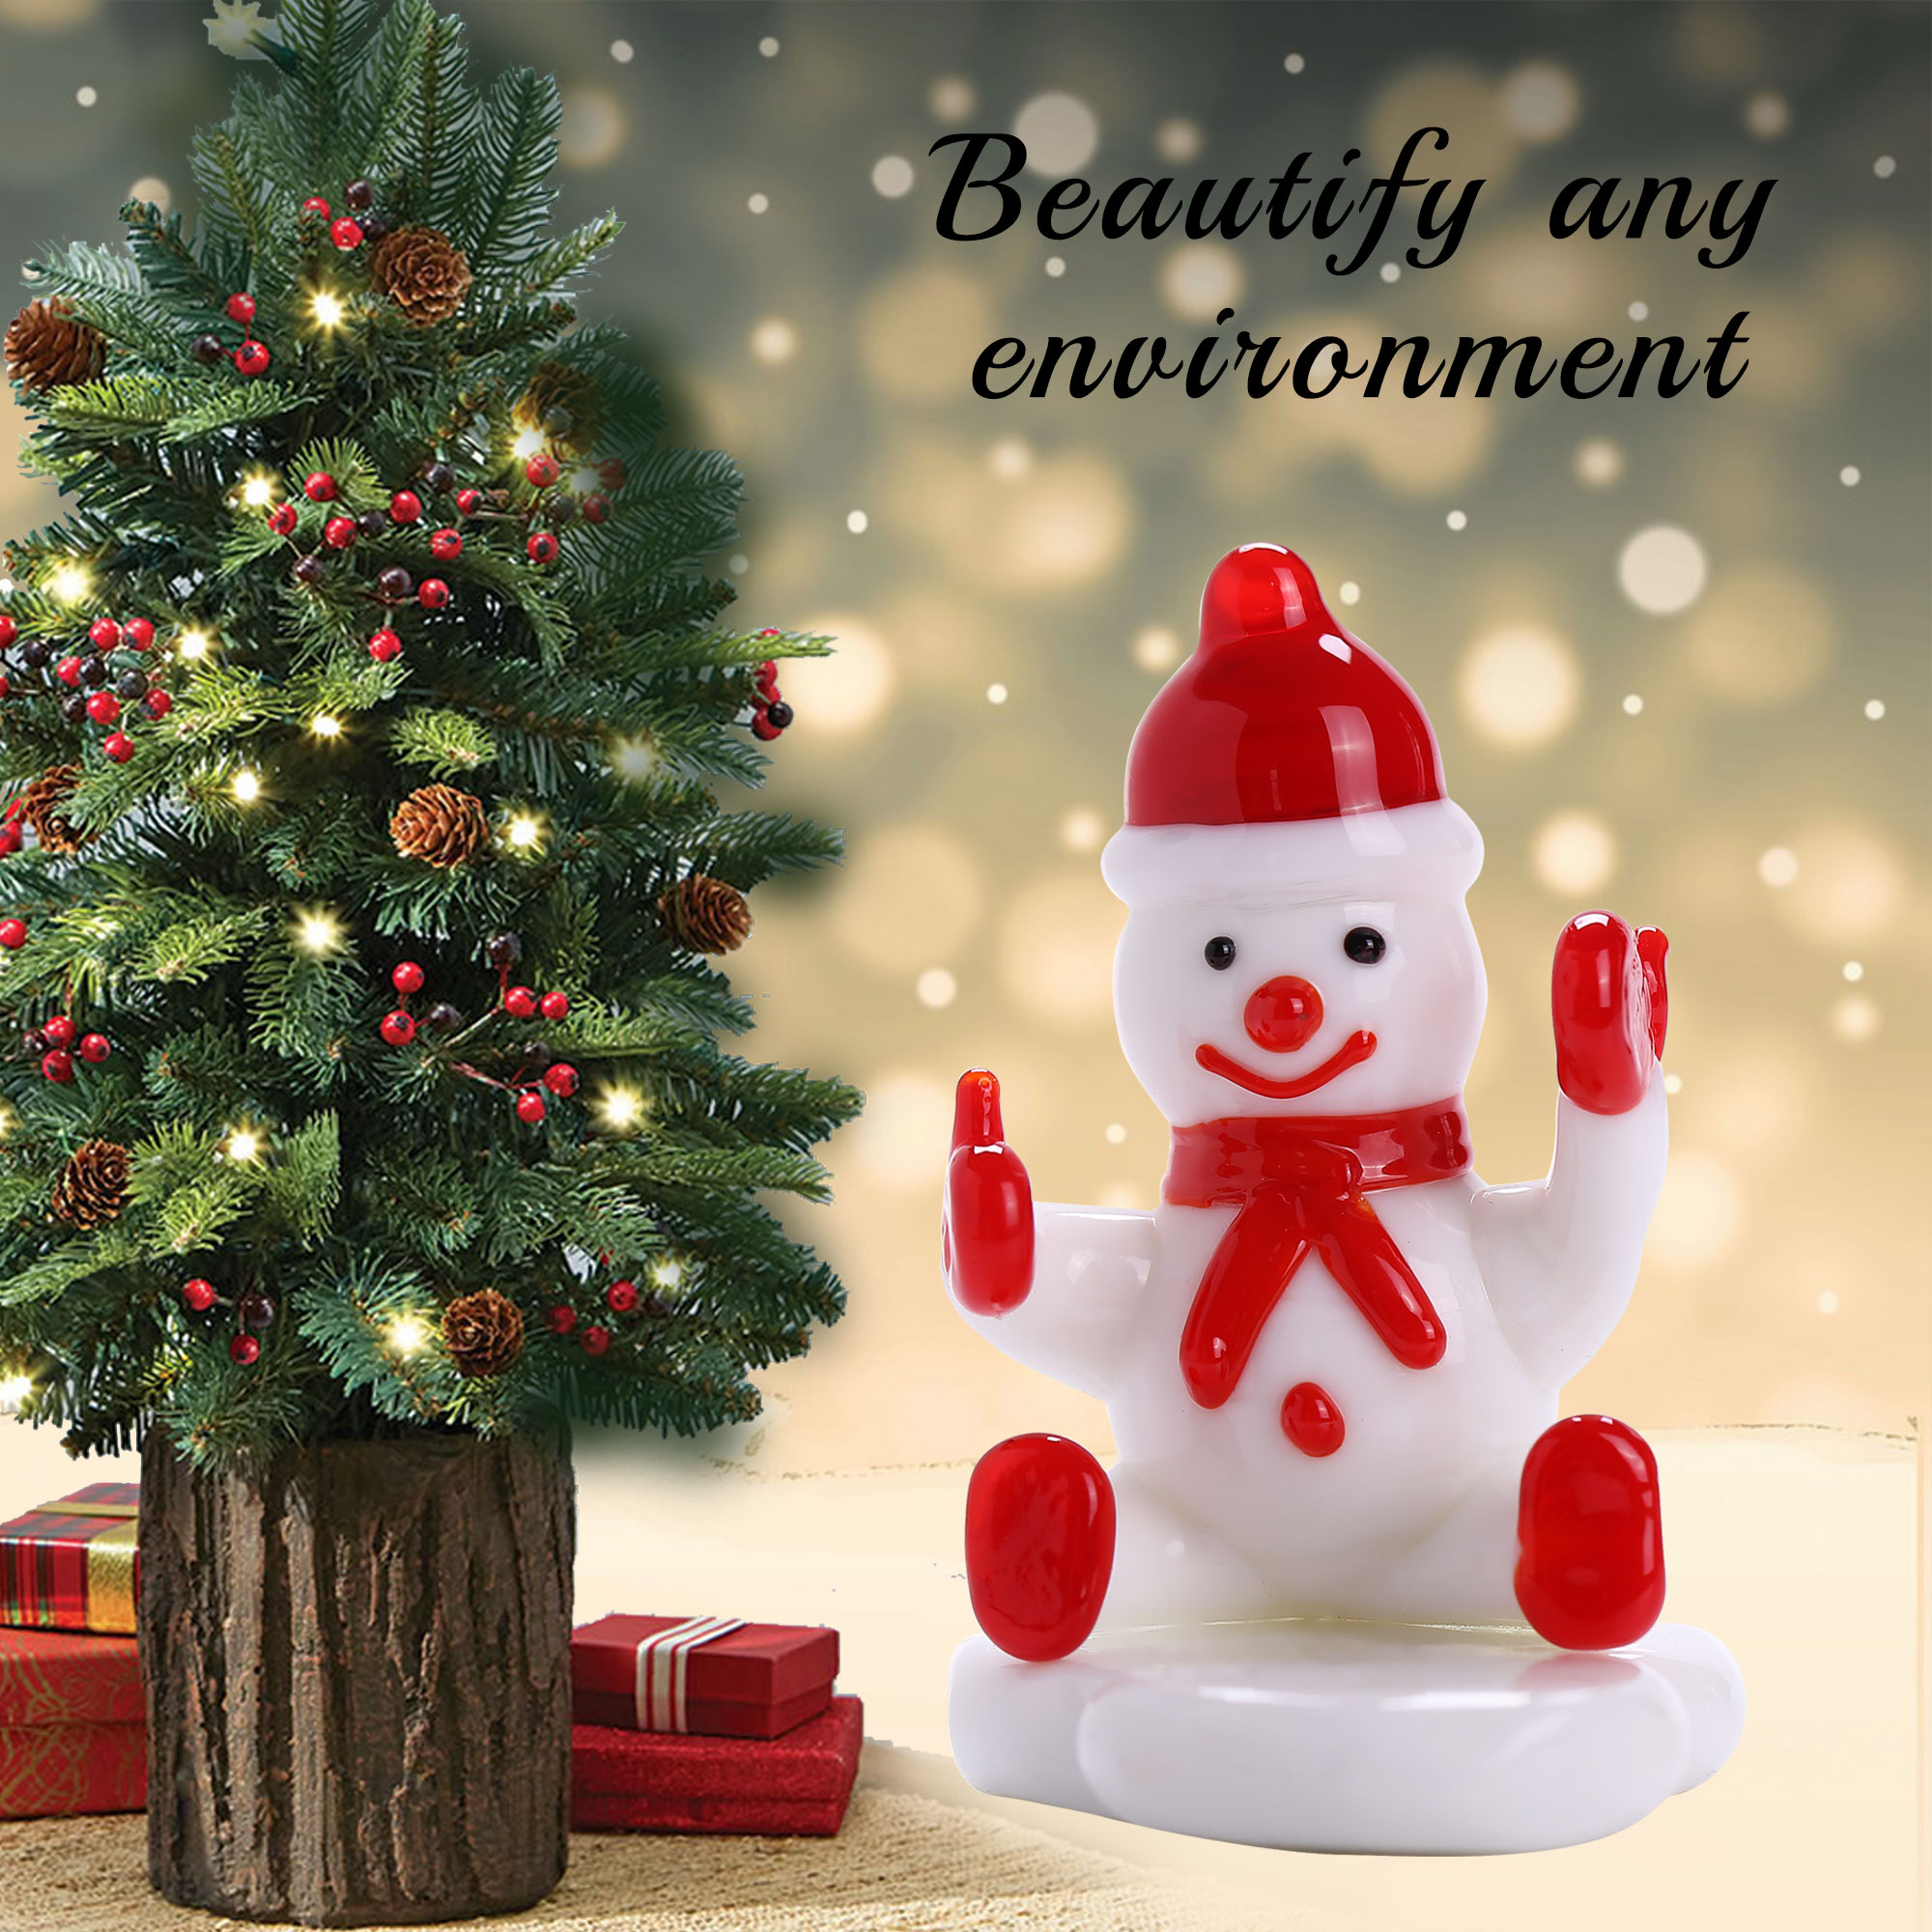 Matashi Murano Christmas Winter Decorative Glass Snowman Figurine White & Red 